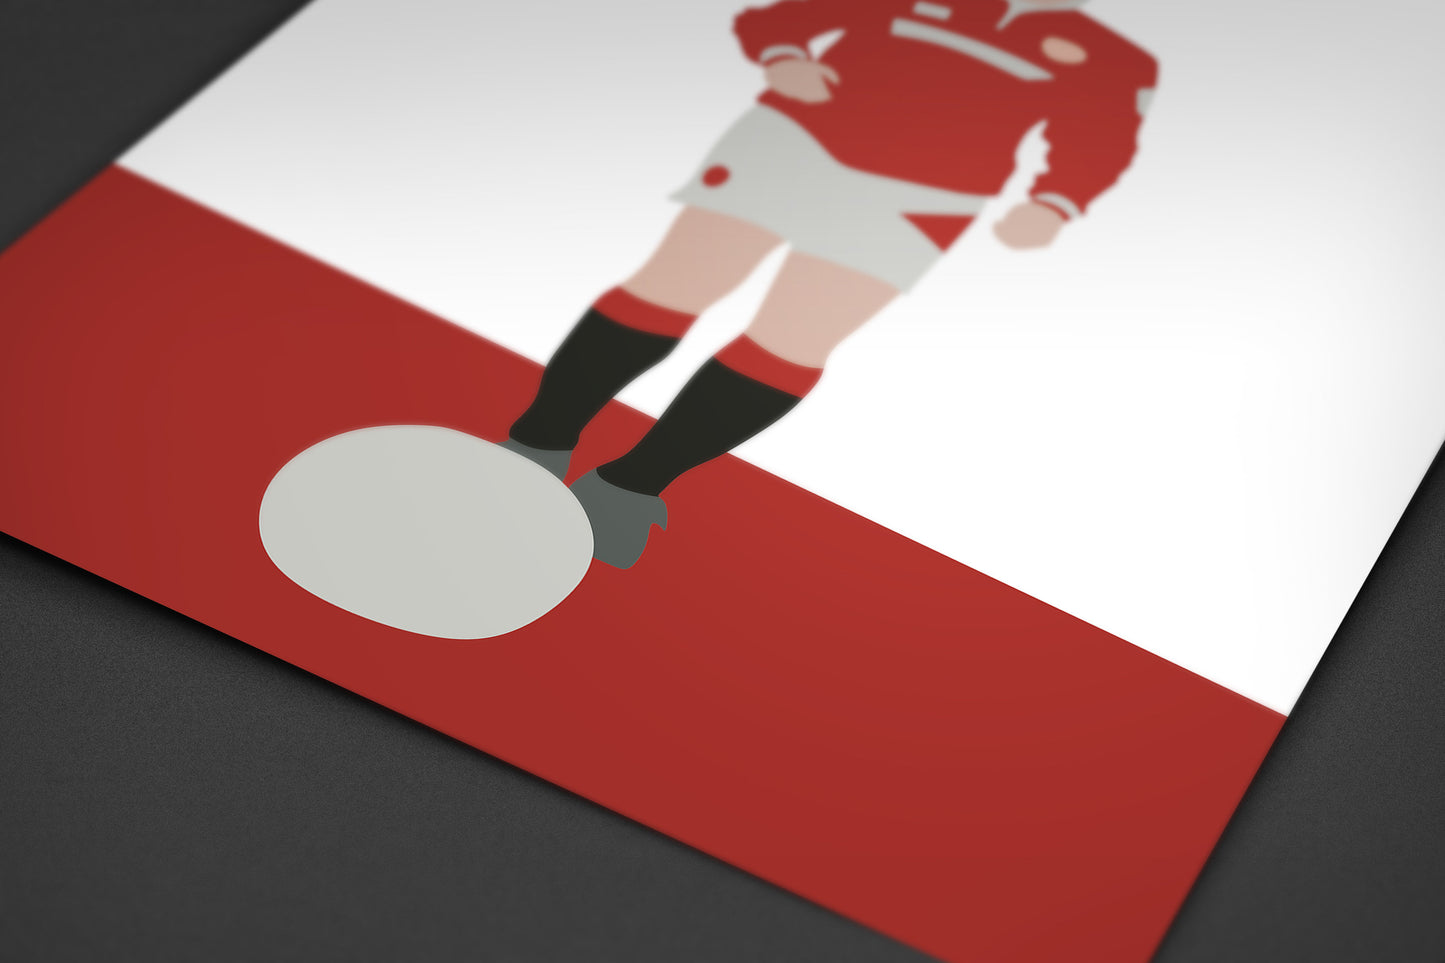 Classic Cantona Minimalist Art Print Poster Gift Idea For Him | Football Print | Soccer| Gift for Husband Boyfriend